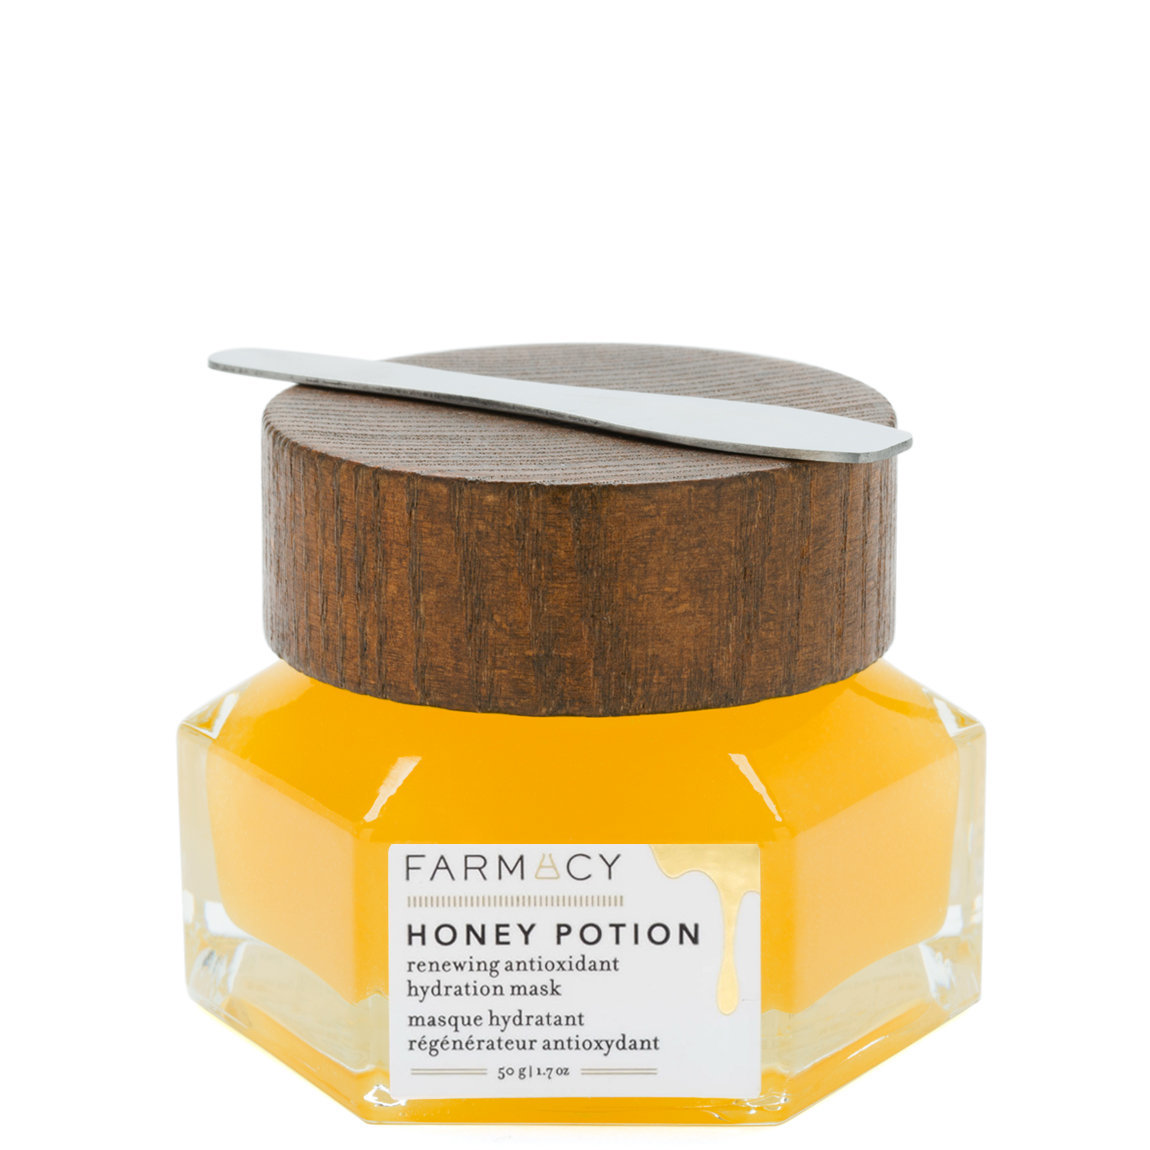 Farmacy Honey Potion Renewing Antioxidant Hydration Mask 1.7 oz alternative view 1.